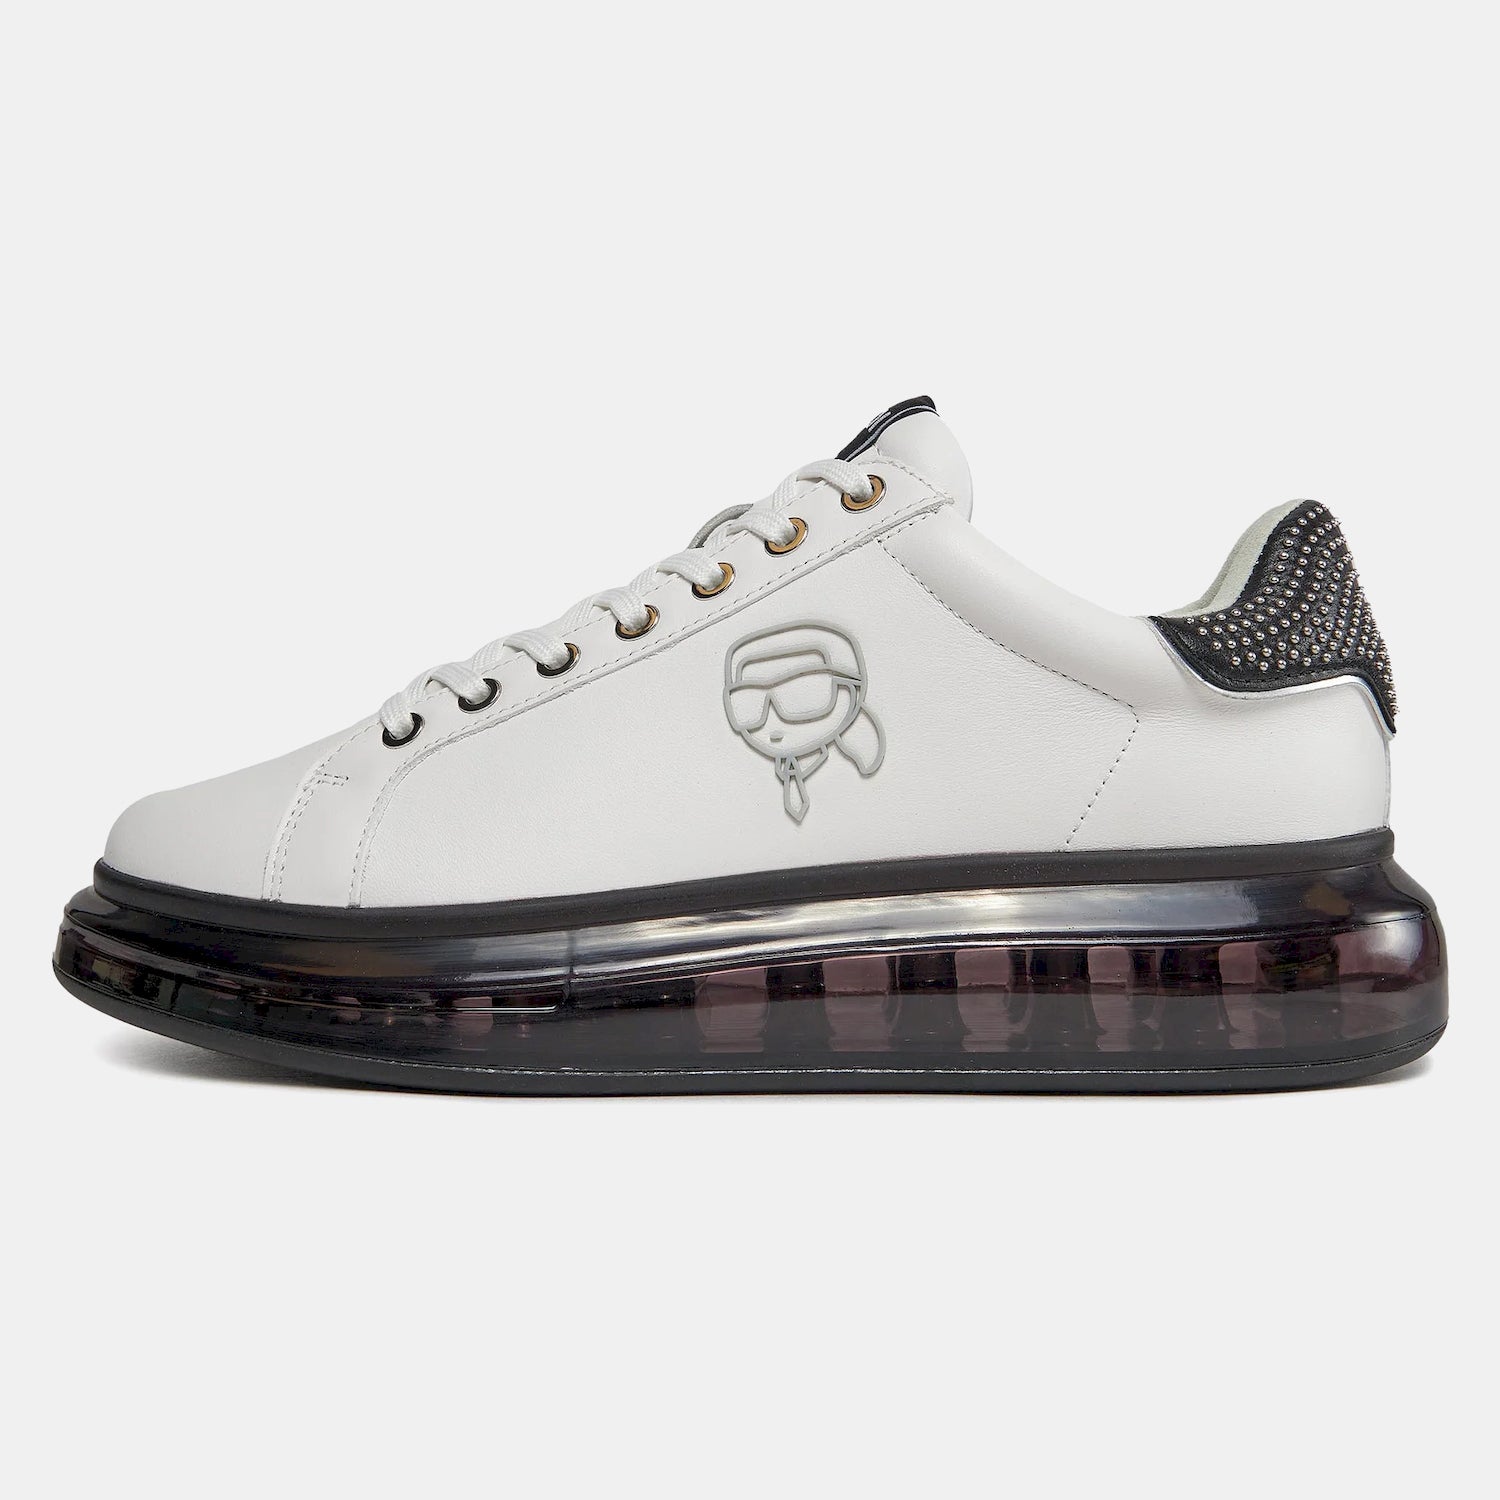 Karl Lagerfeld Sapatilhas Sneakers Shoes Kl52631n Whi Black Branco Preto_shot5